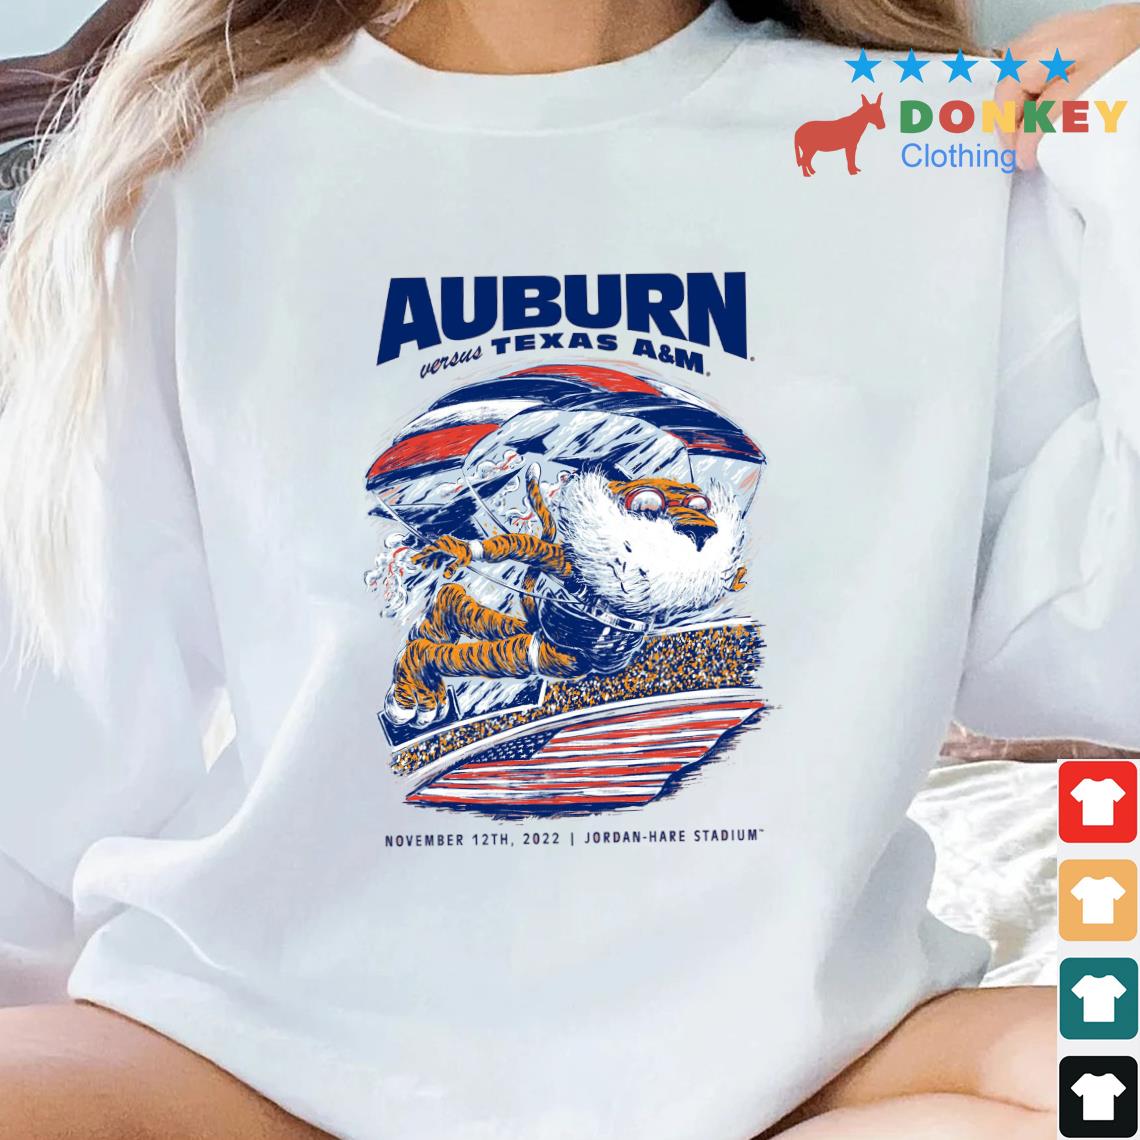 Auburn Vs Texas AM November 12th 2022 Jordan Hare Stadium Shirt